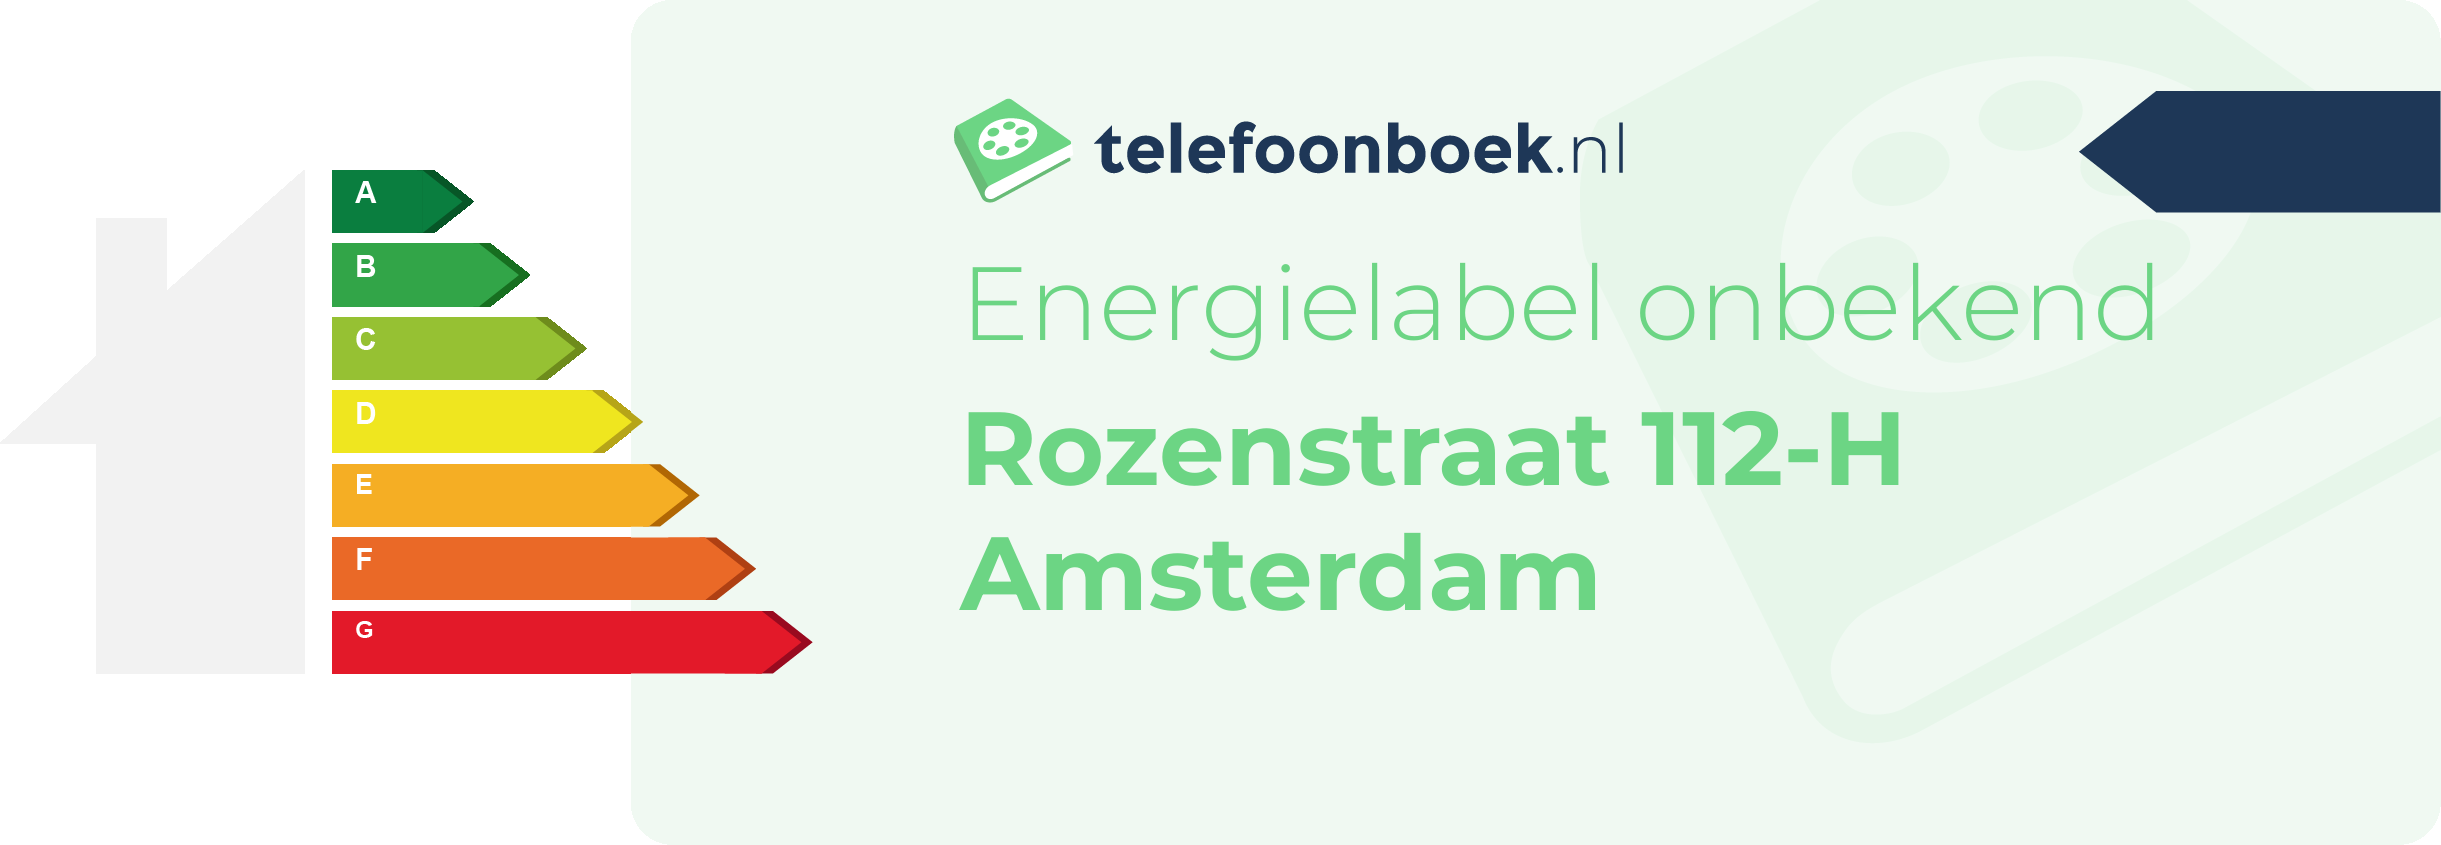 Energielabel Rozenstraat 112-H Amsterdam